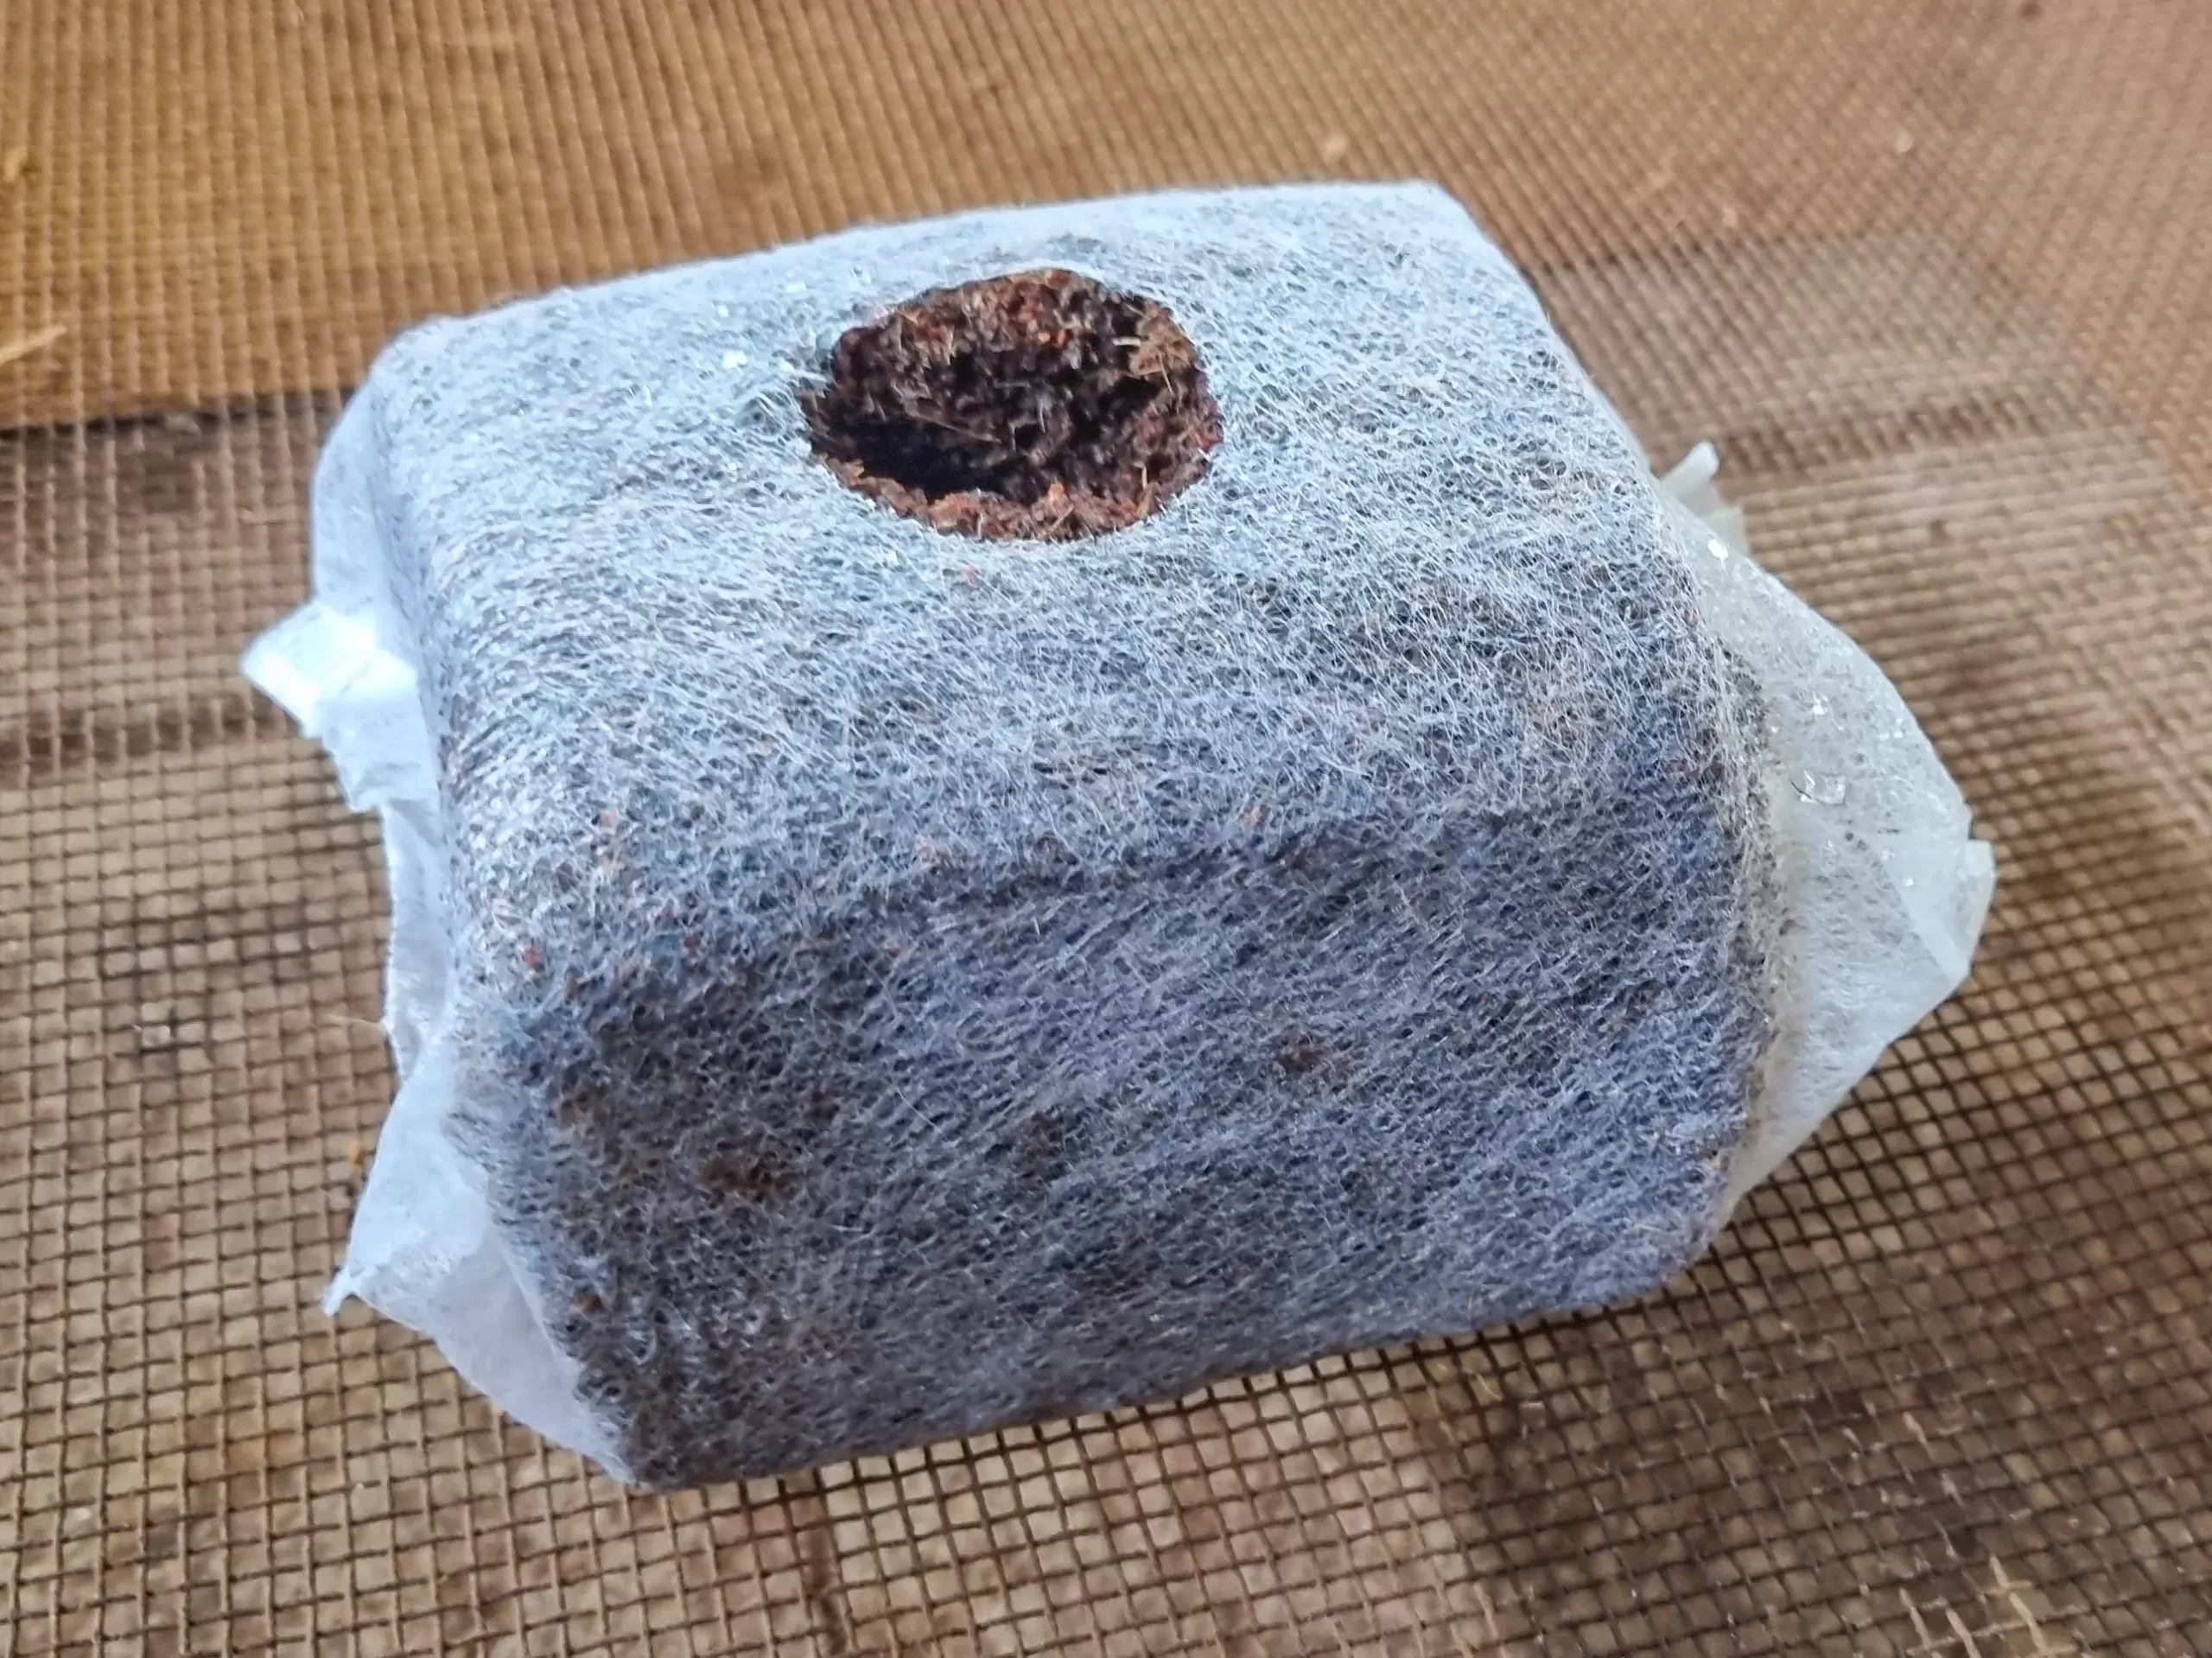 Coco Peat Propagation Cubes